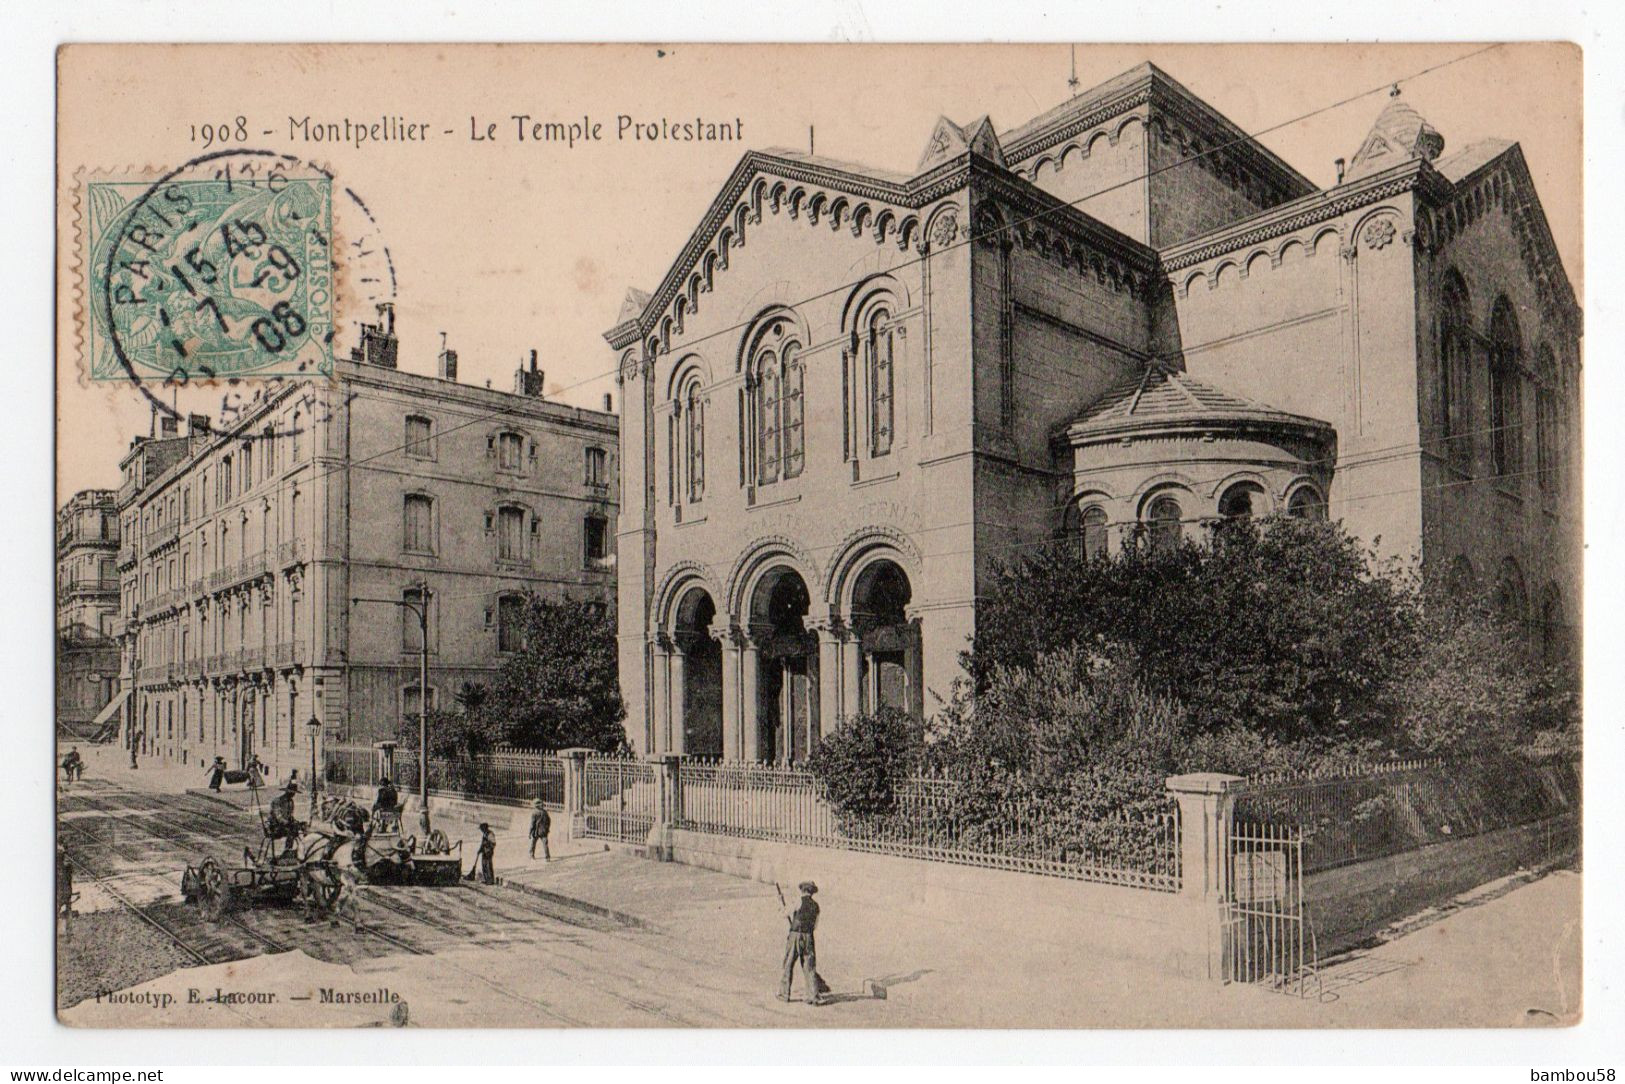 MONTPELLIER * HERAULT * TEMPLE PROTESTANT * 1908 * TRAVAUX CHAUSSEE * Phtotypie Lacour, Marseille - Montpellier